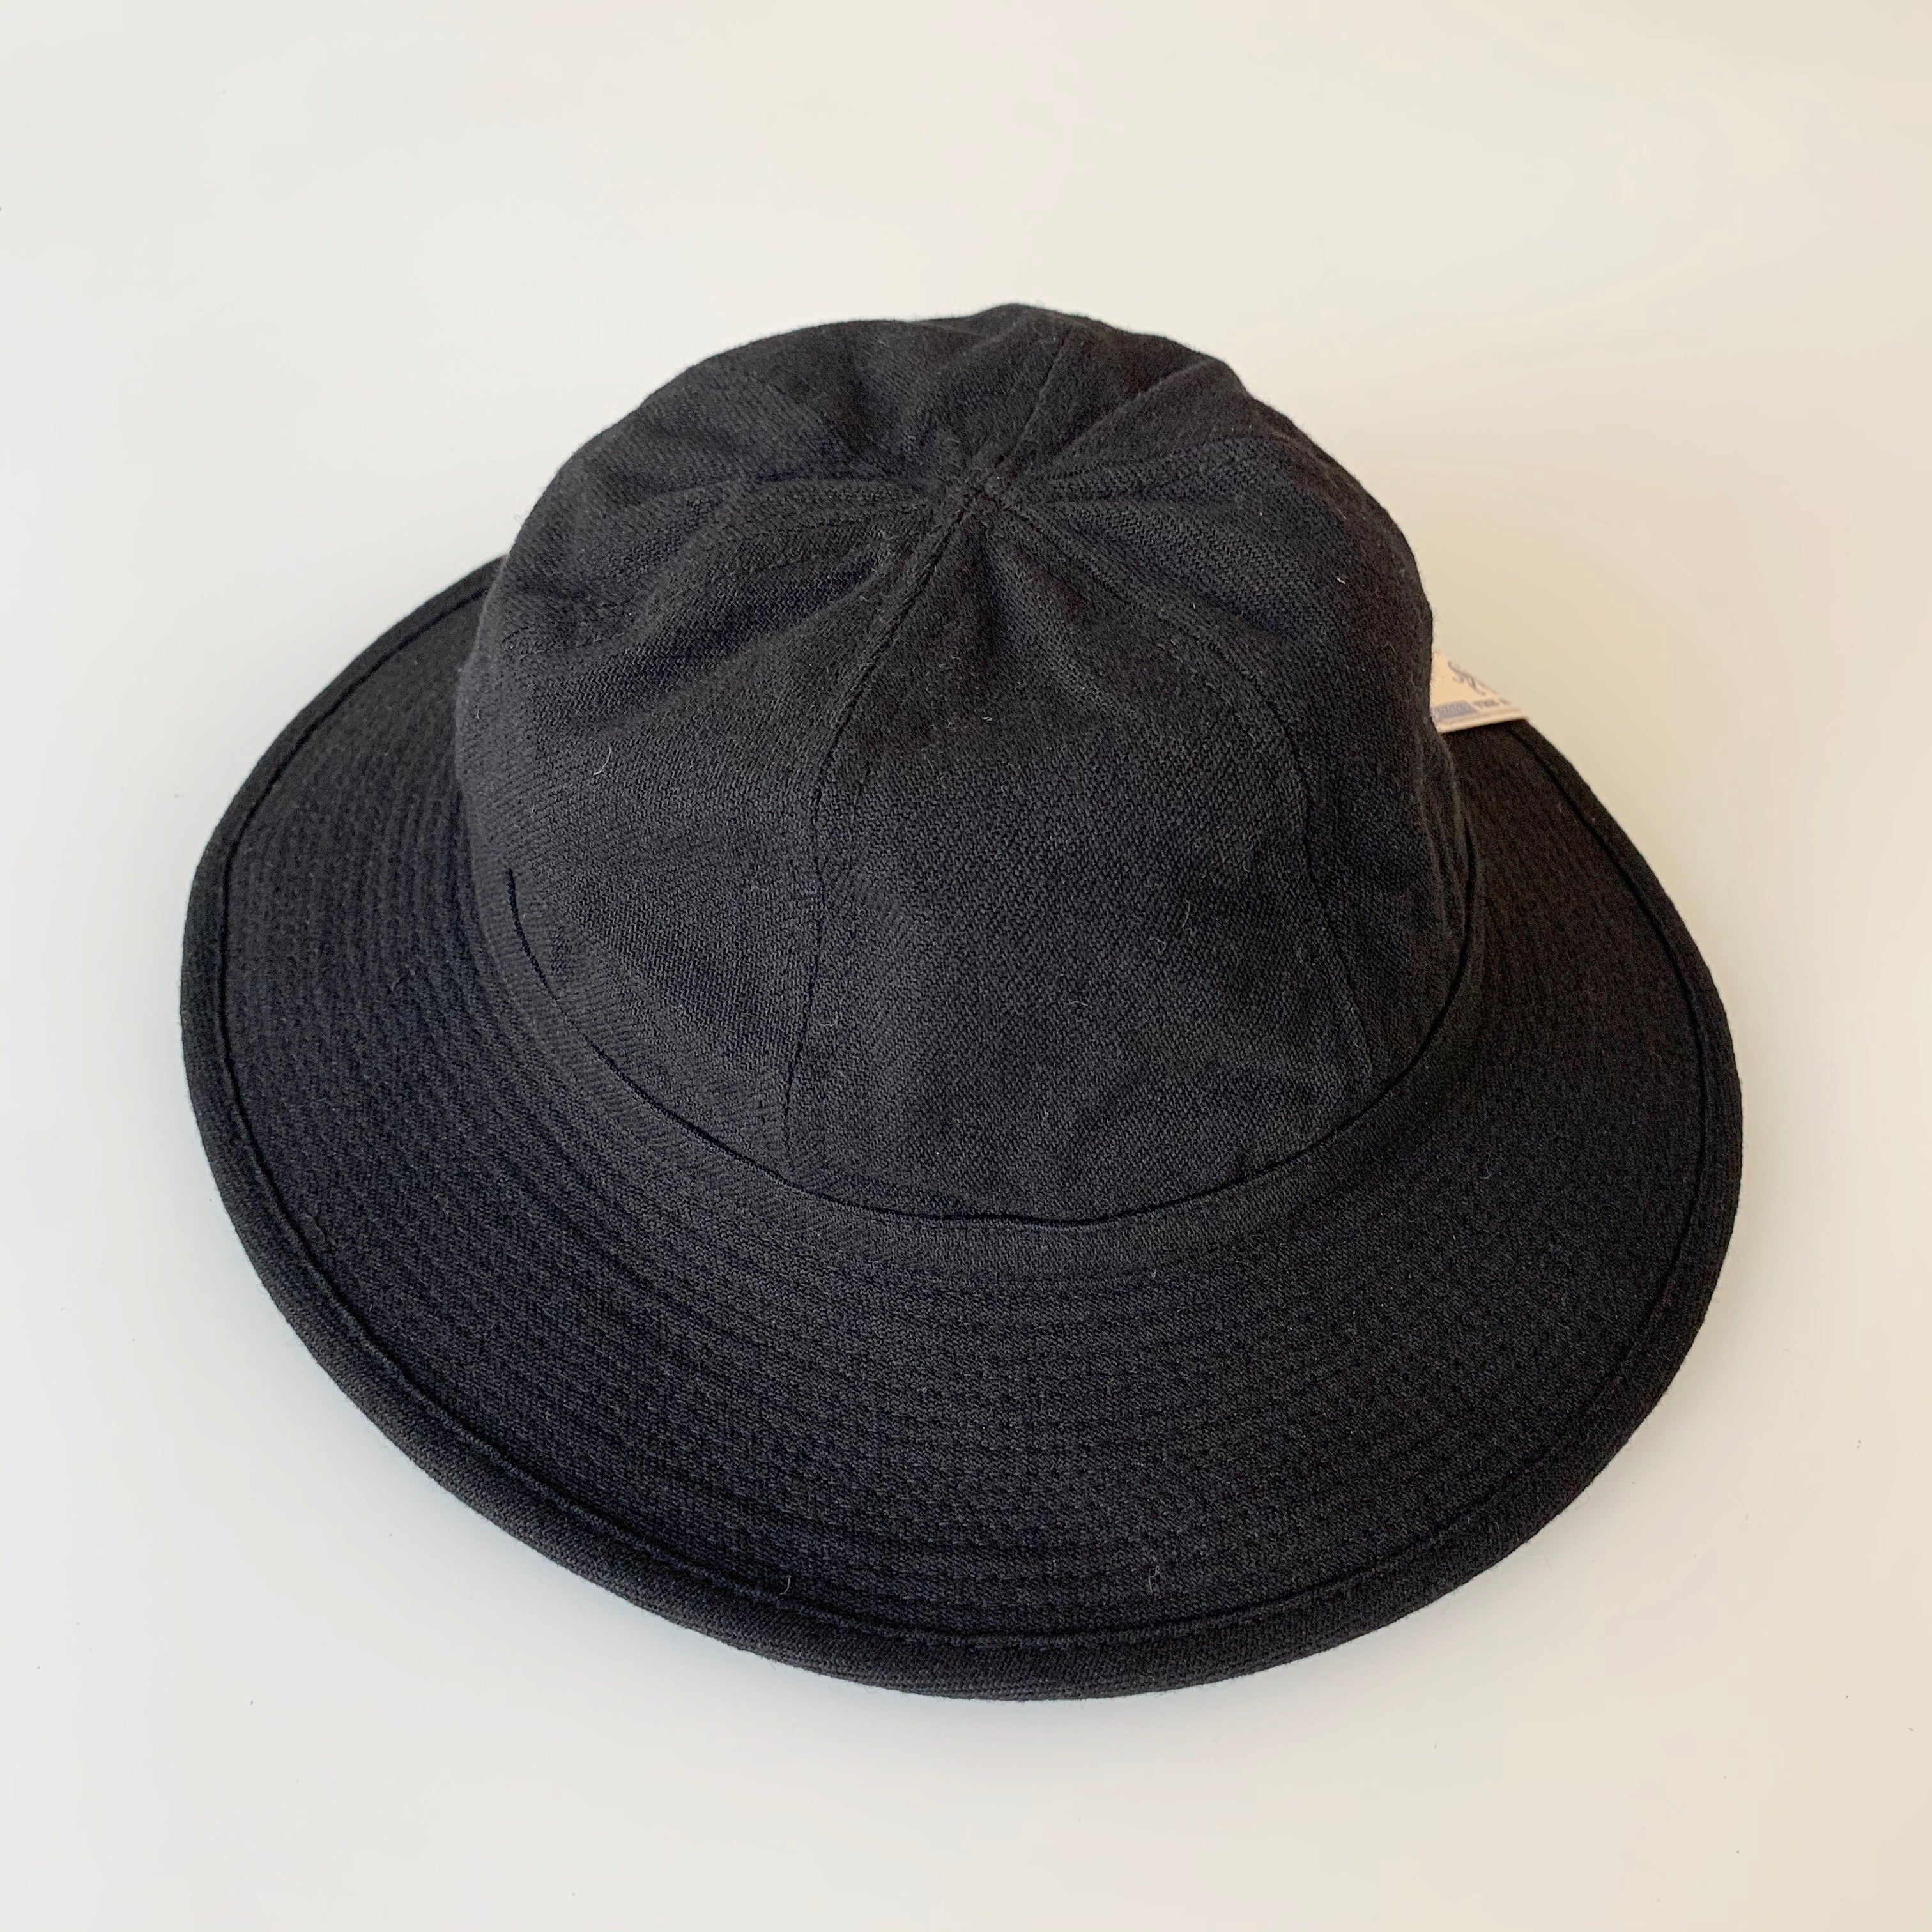 Fatigue Hat in Black Wool Cotton Serge